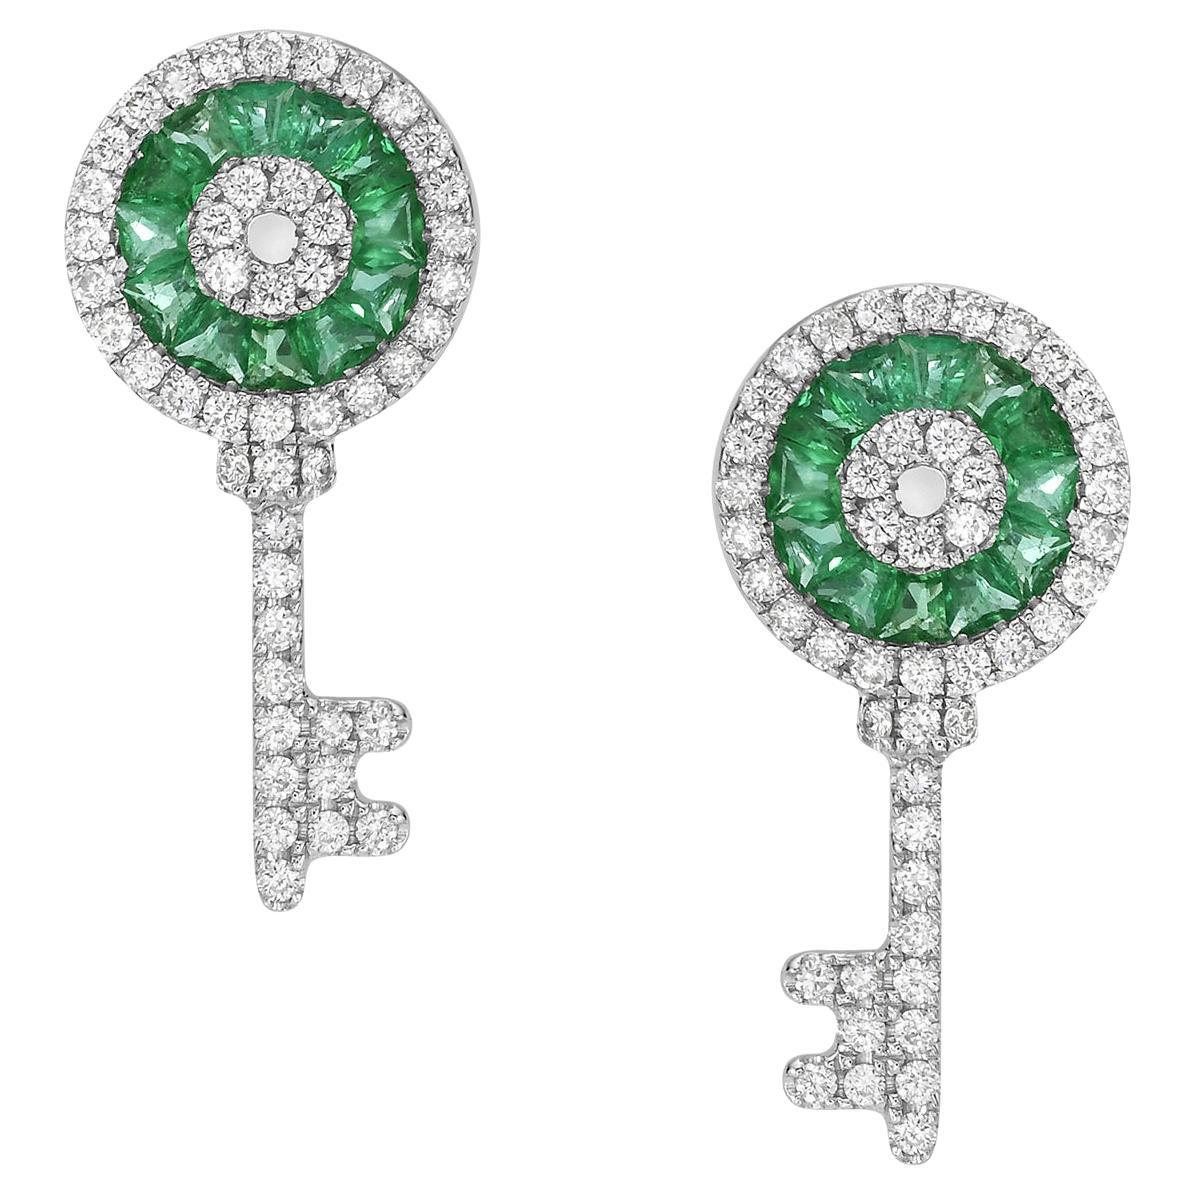 1.01 Ct Emerald & Diamond Earrings Designed In Key Shape Made In 18k White Gold